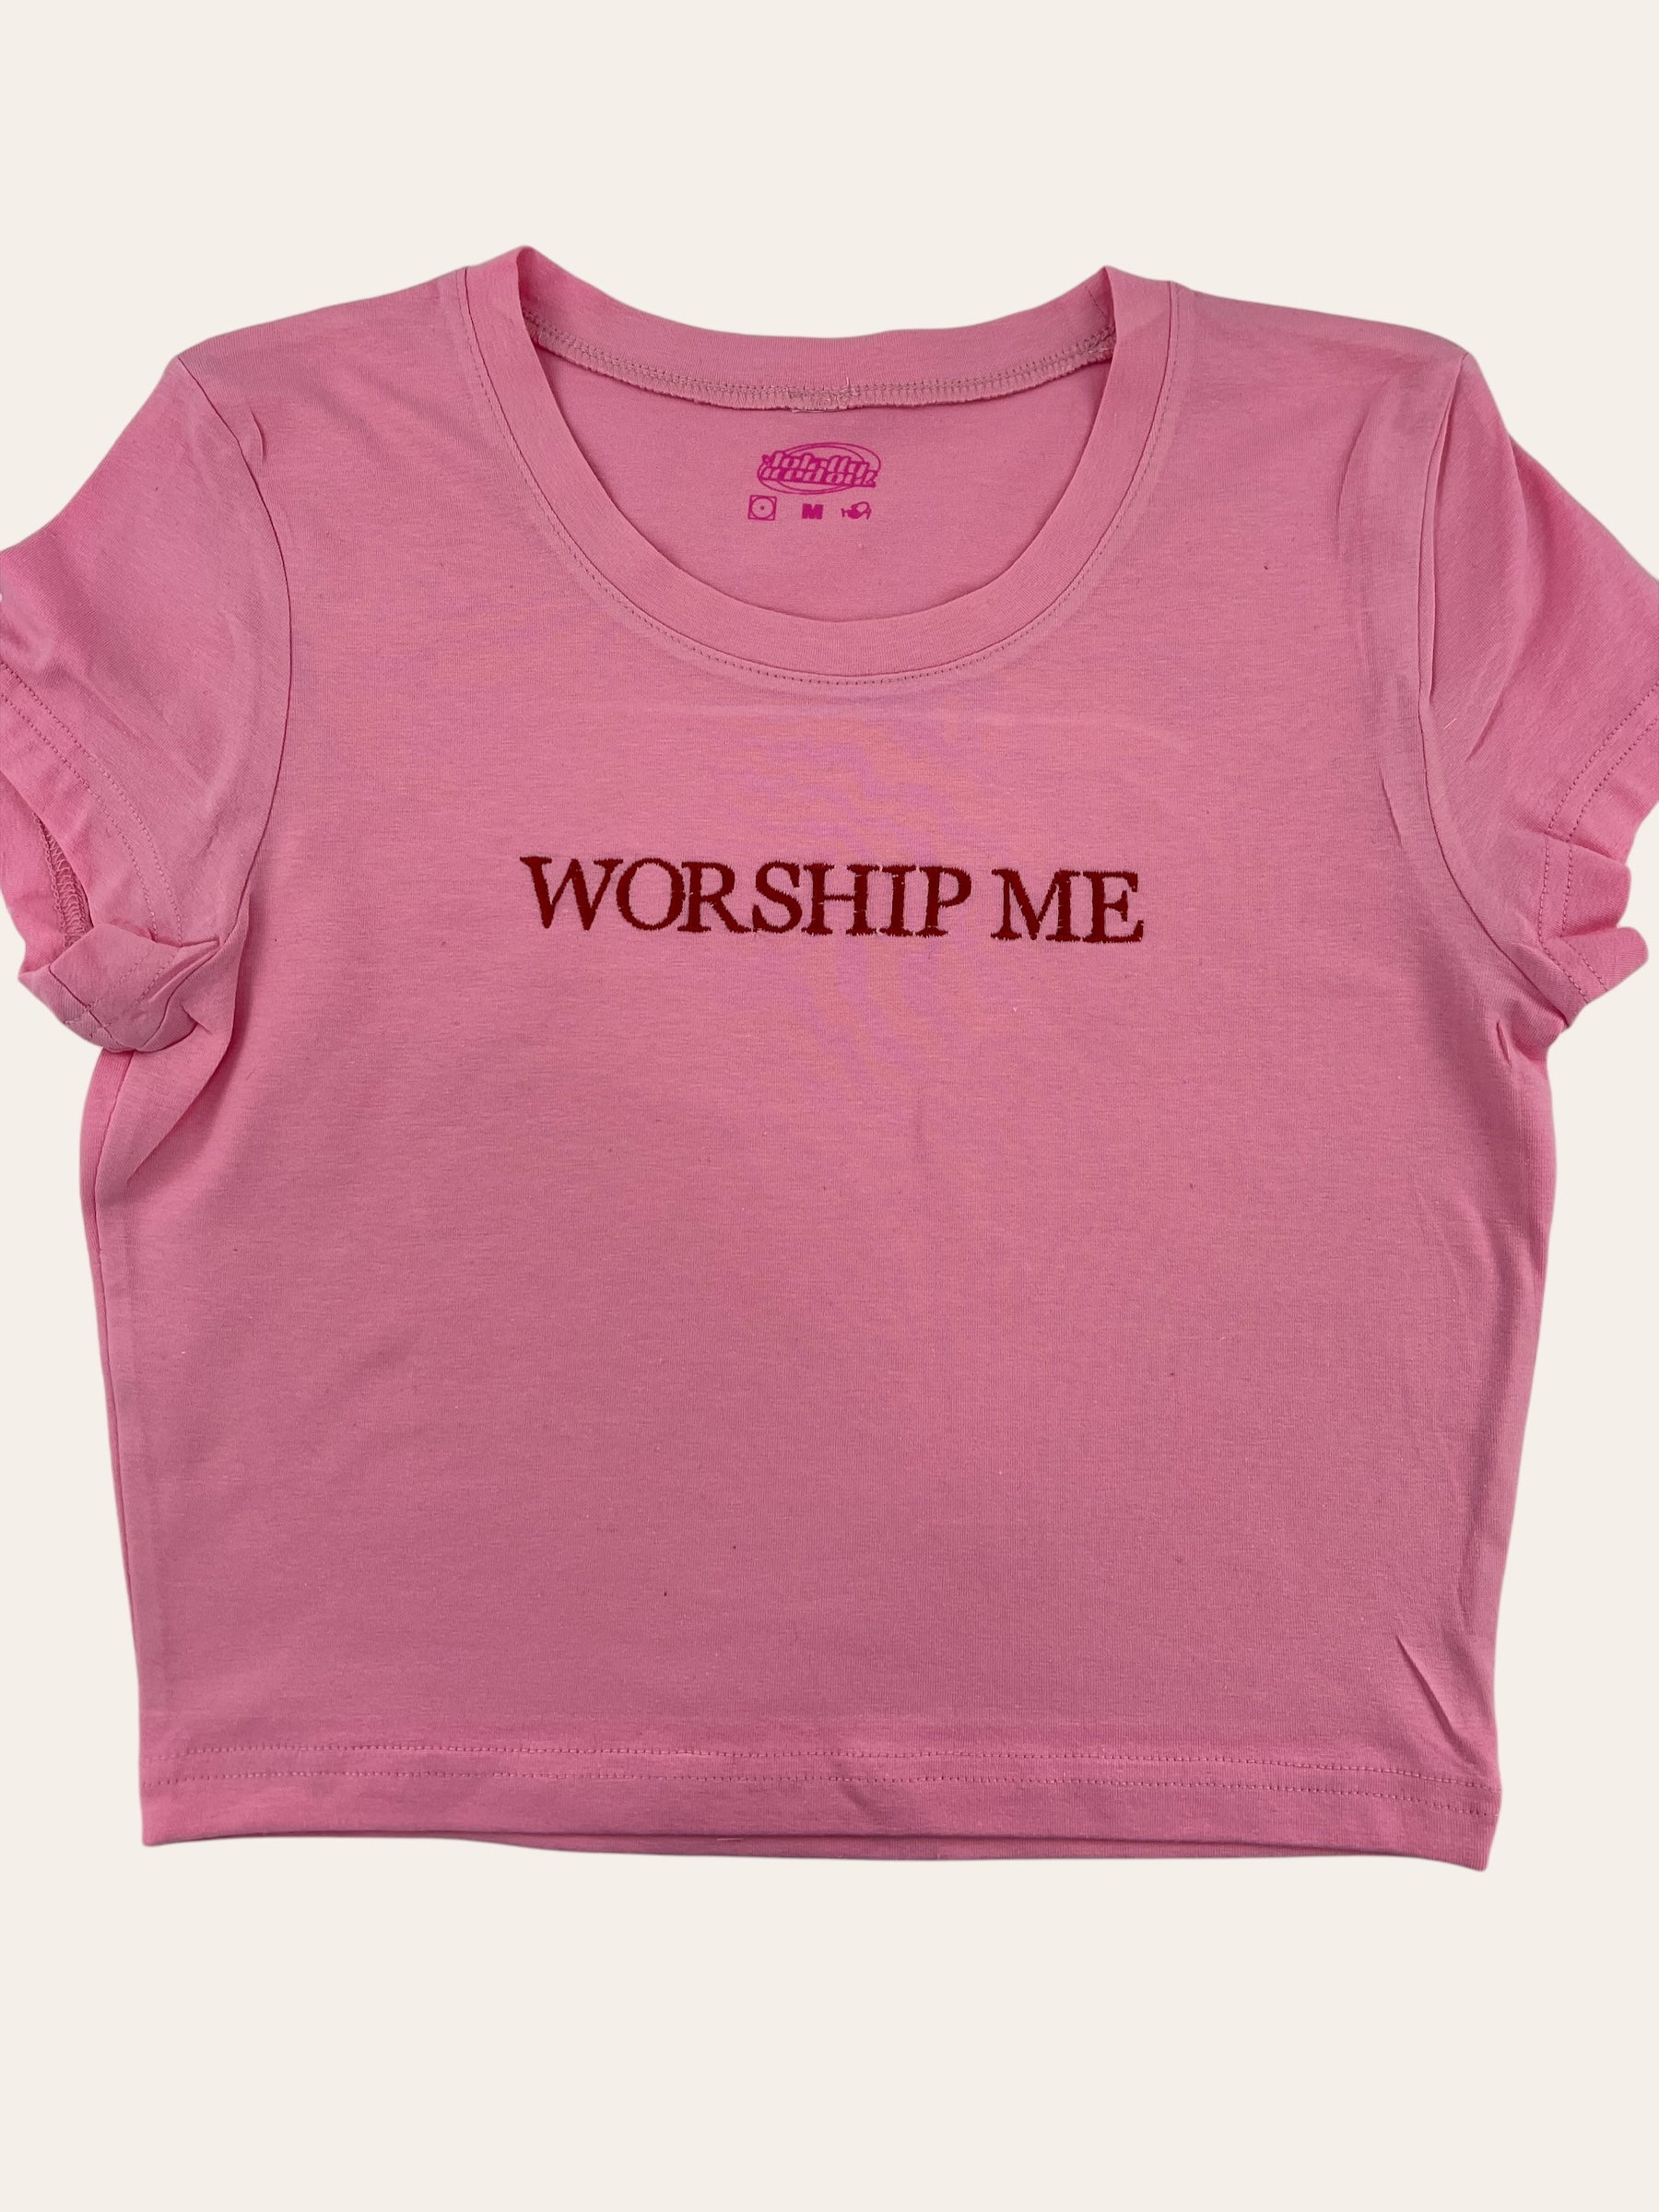 a pink shirt that says worship me